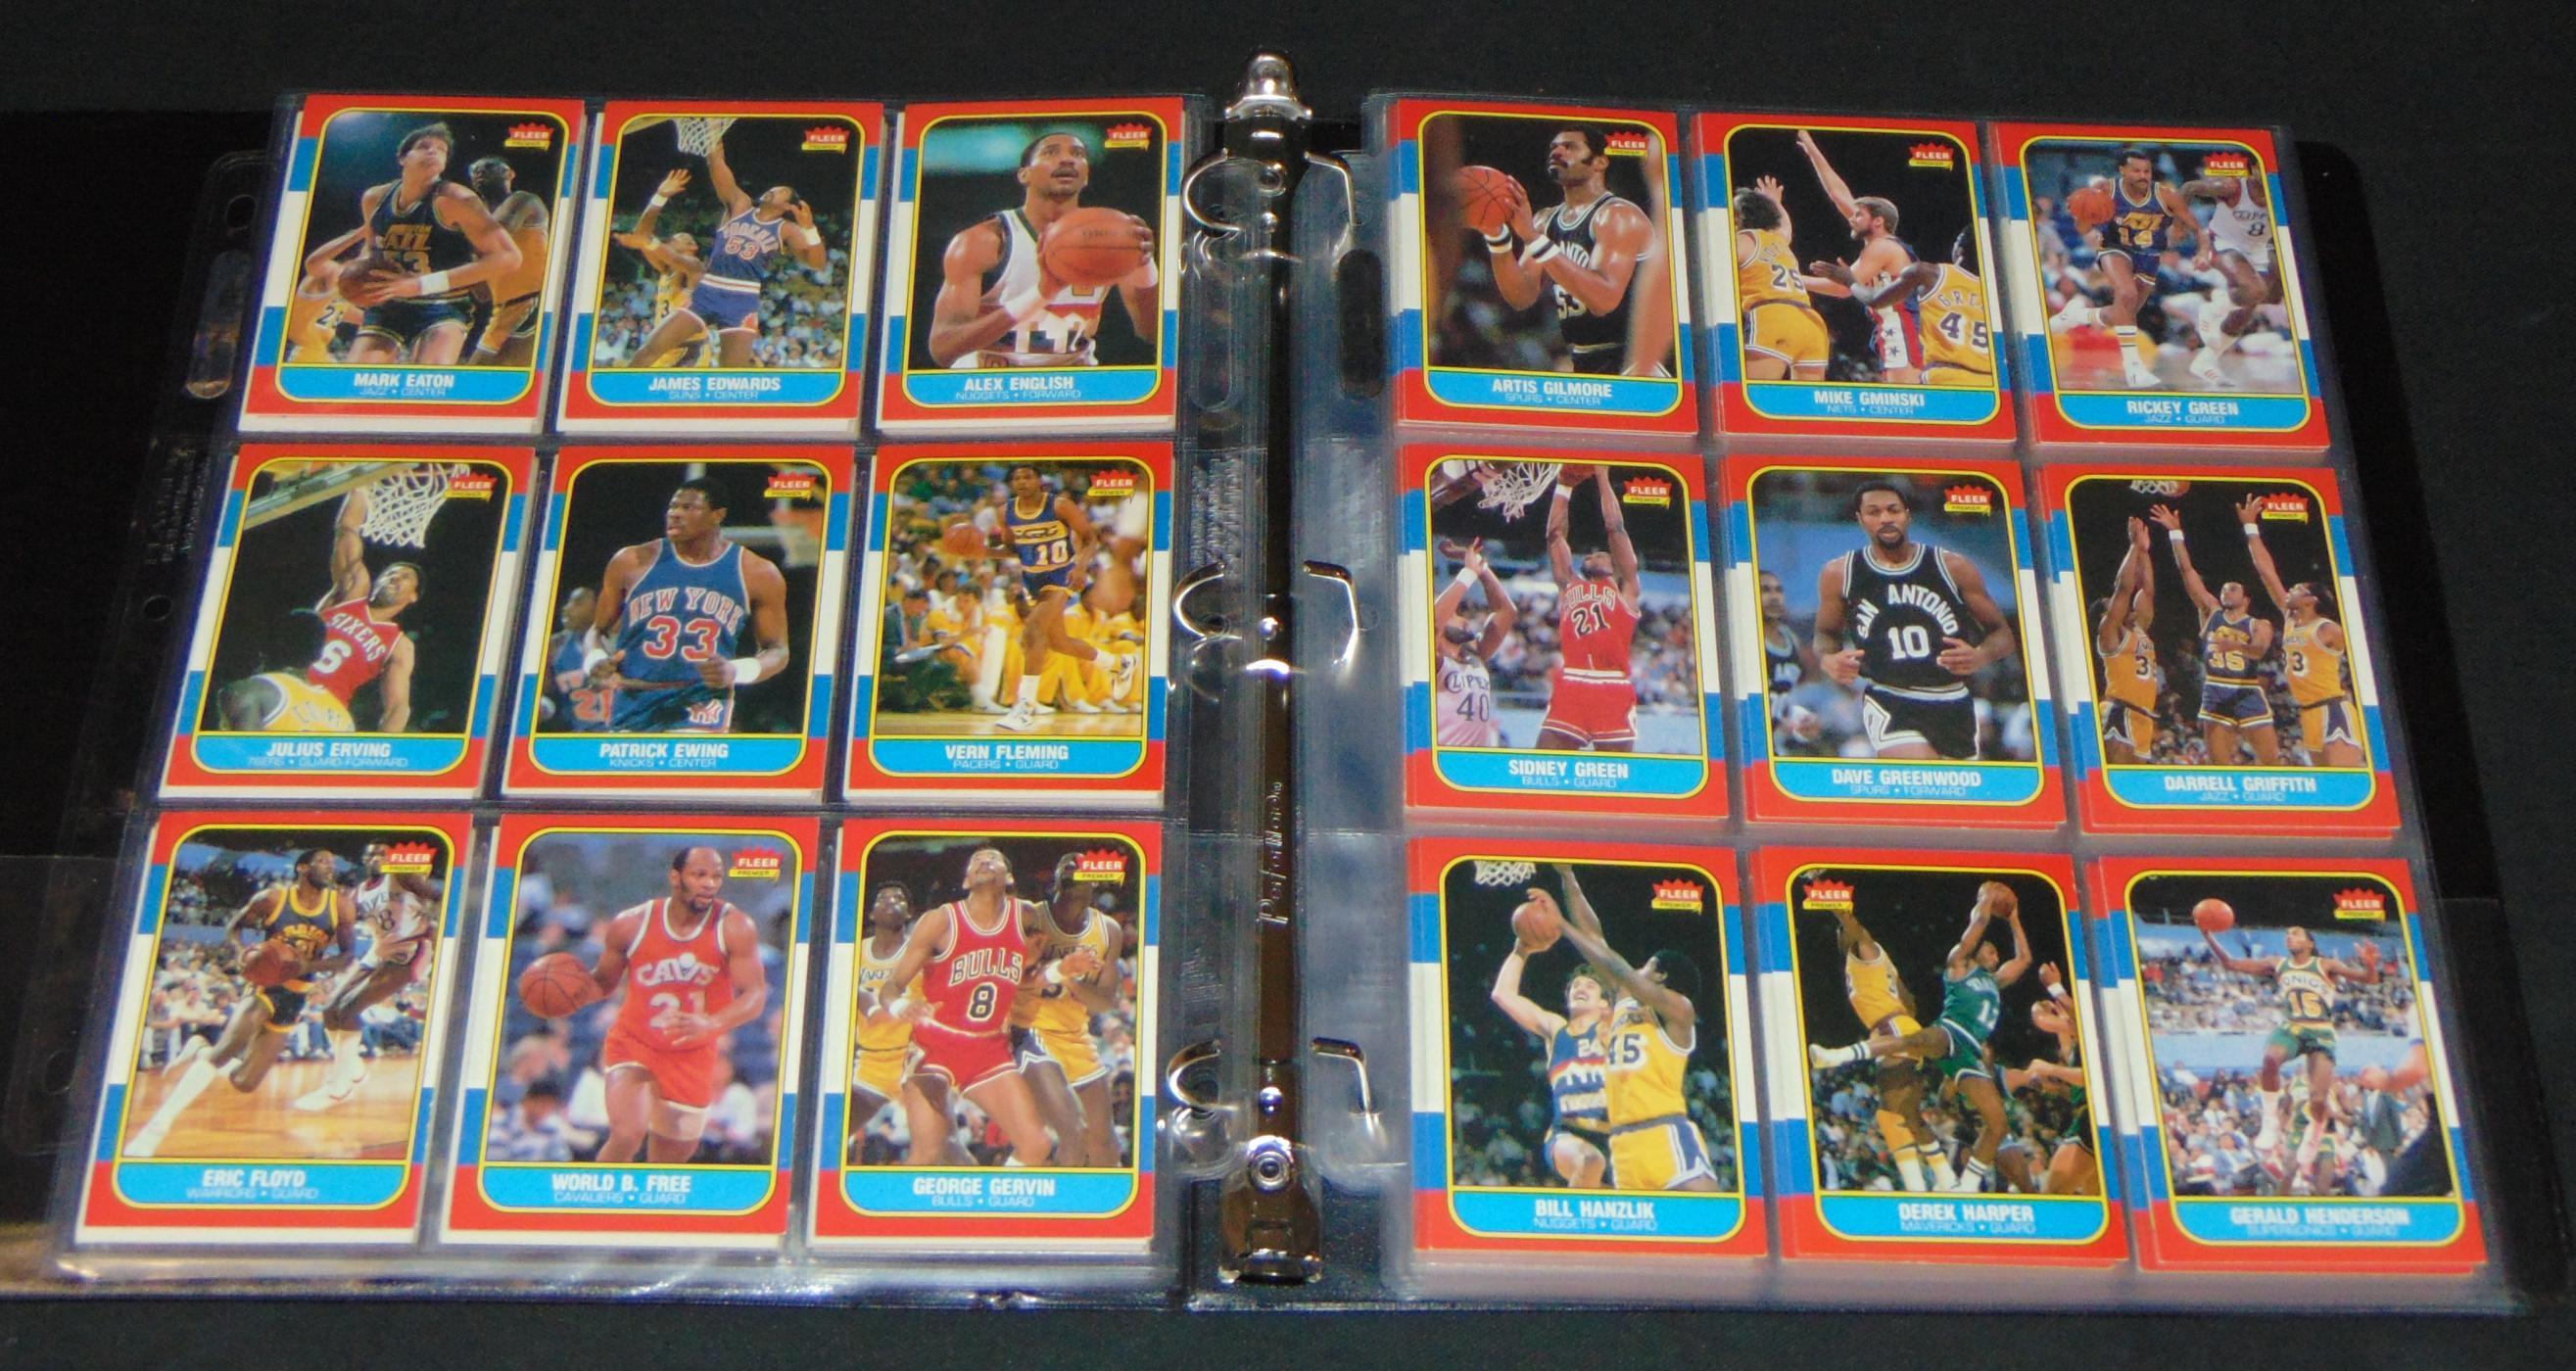 1986 Fleer Basketball Card ands Sticker Sets.